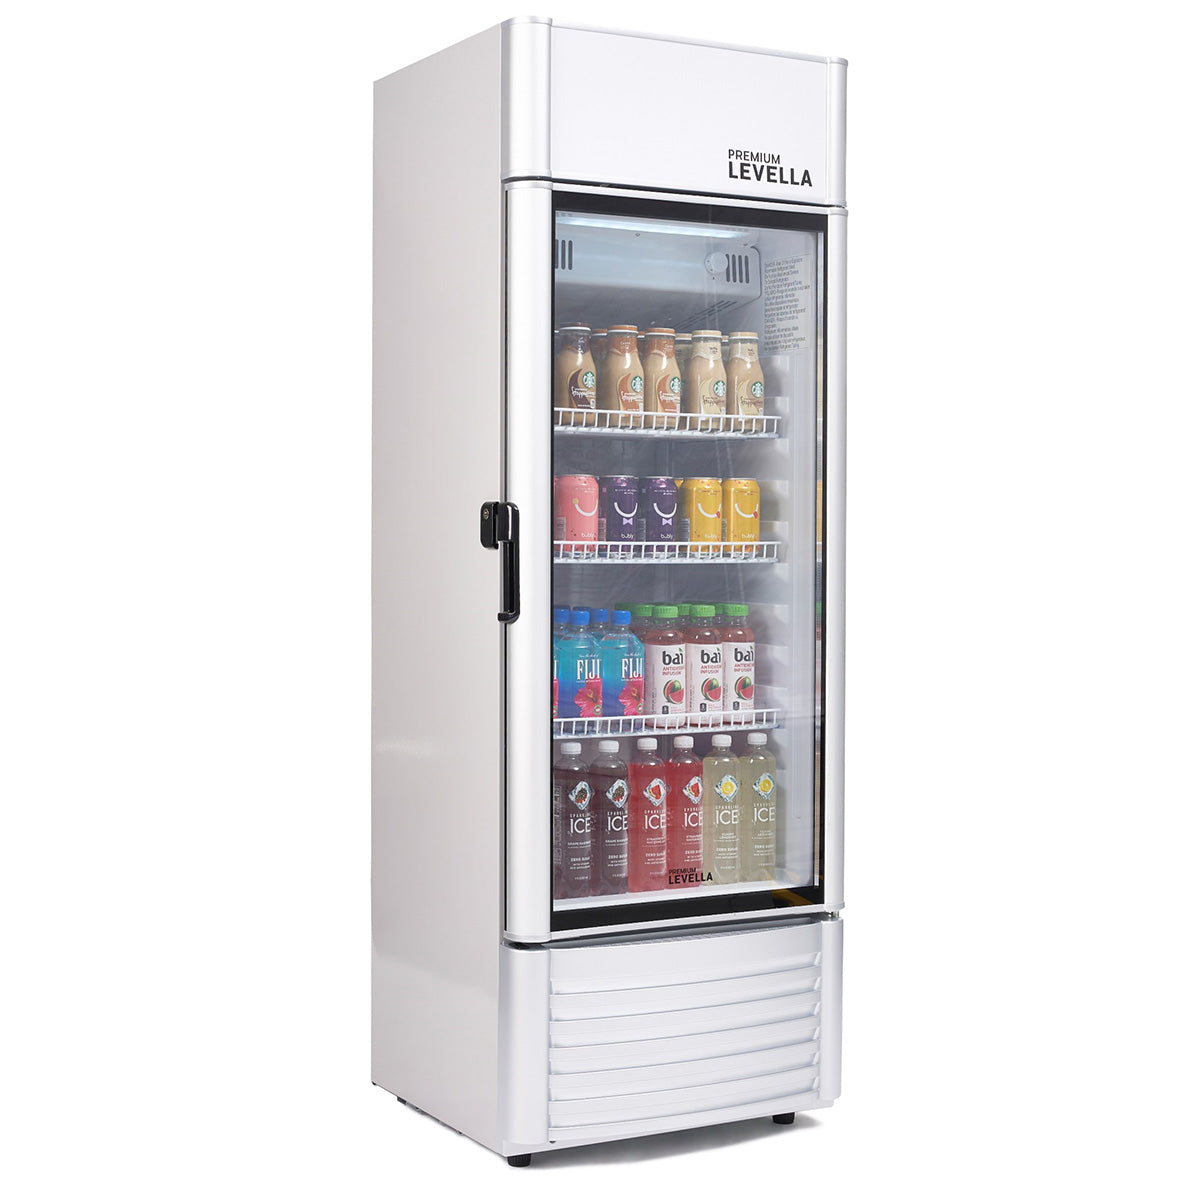 Premium Levella 6.5 cu. ft. Single Glass Door Display 65" Silver Refrigerator